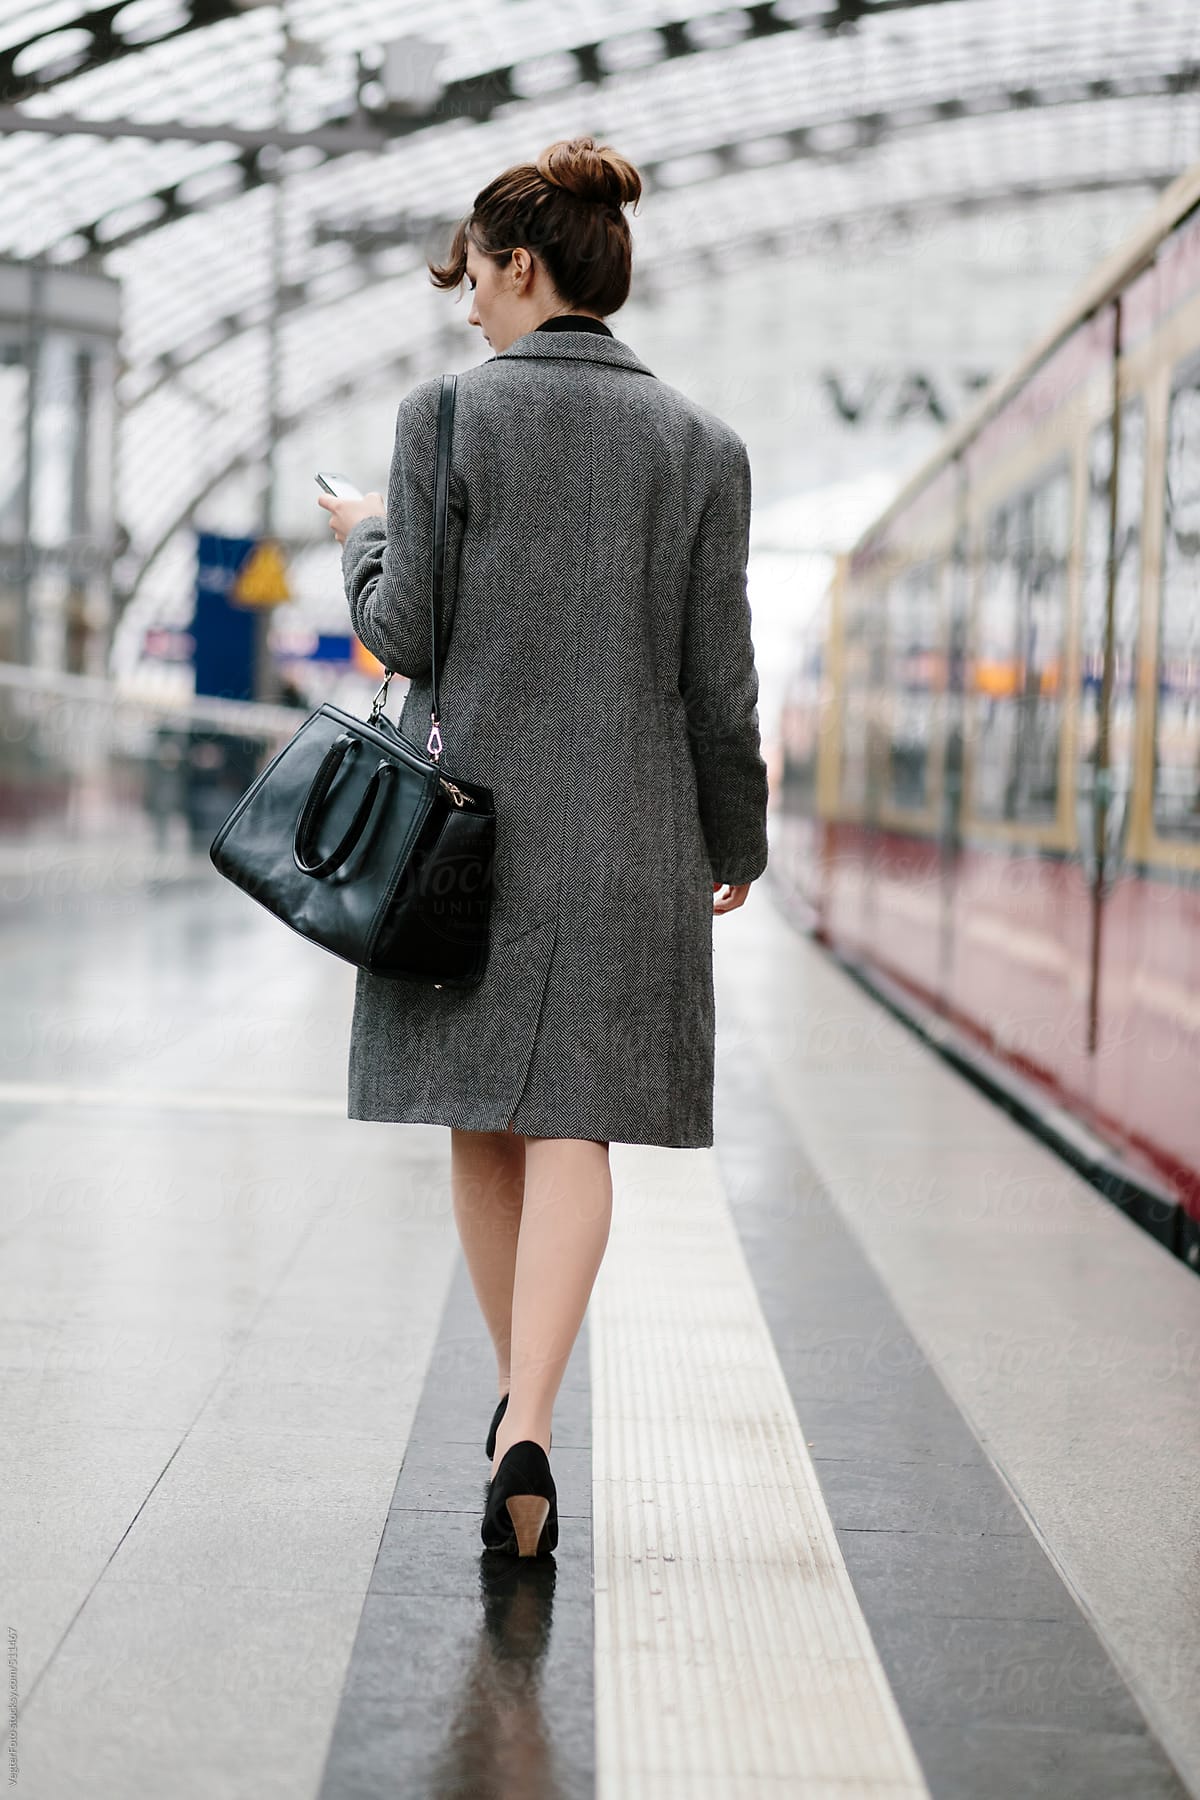 Businesswoman walking On Train Station Platform